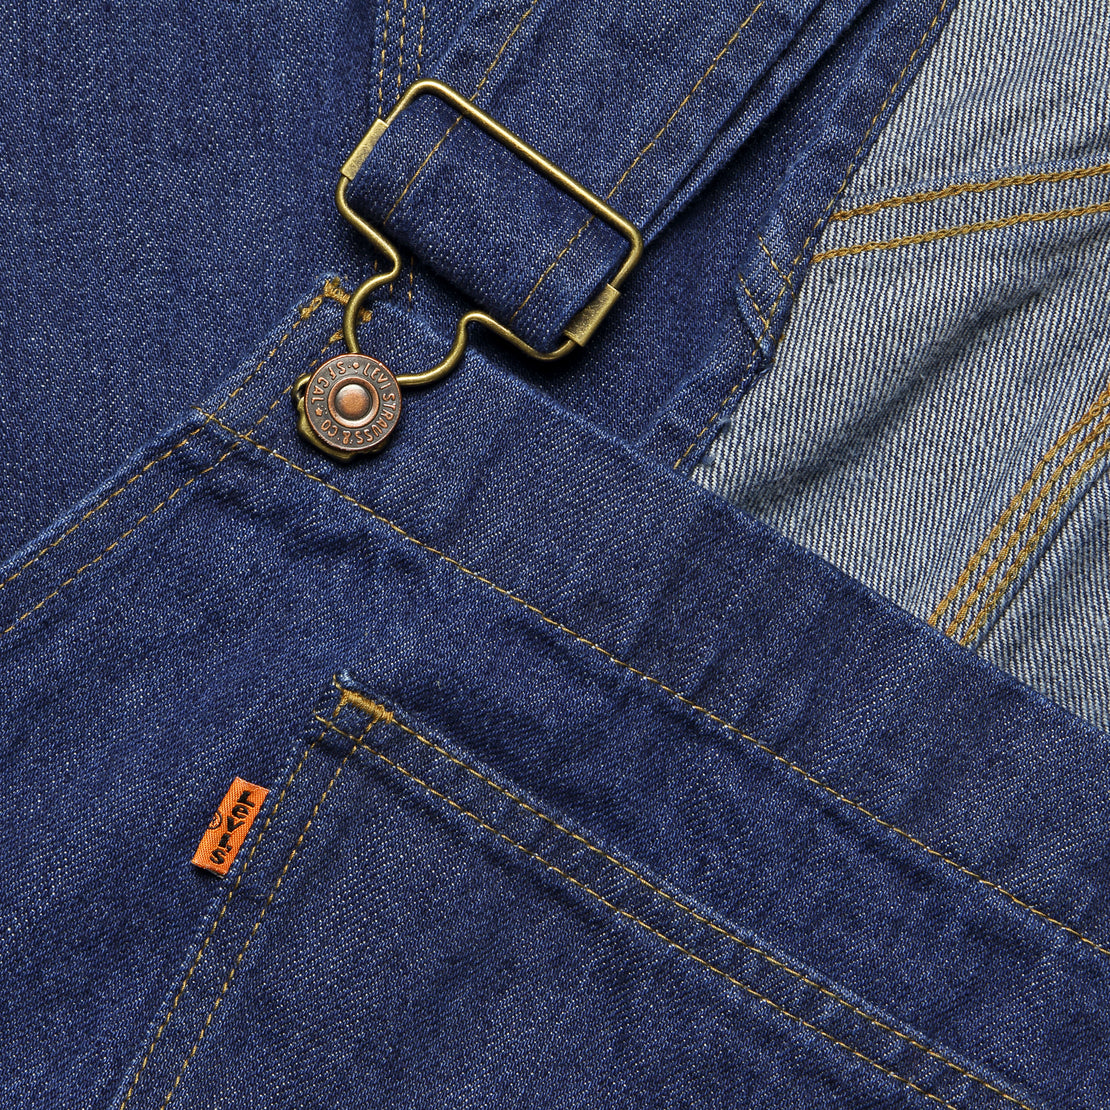 Orange Tab Bib & Brace Overalls - Pit Stop - Levis Vintage Clothing - STAG Provisions - Pants - Jumpsuit